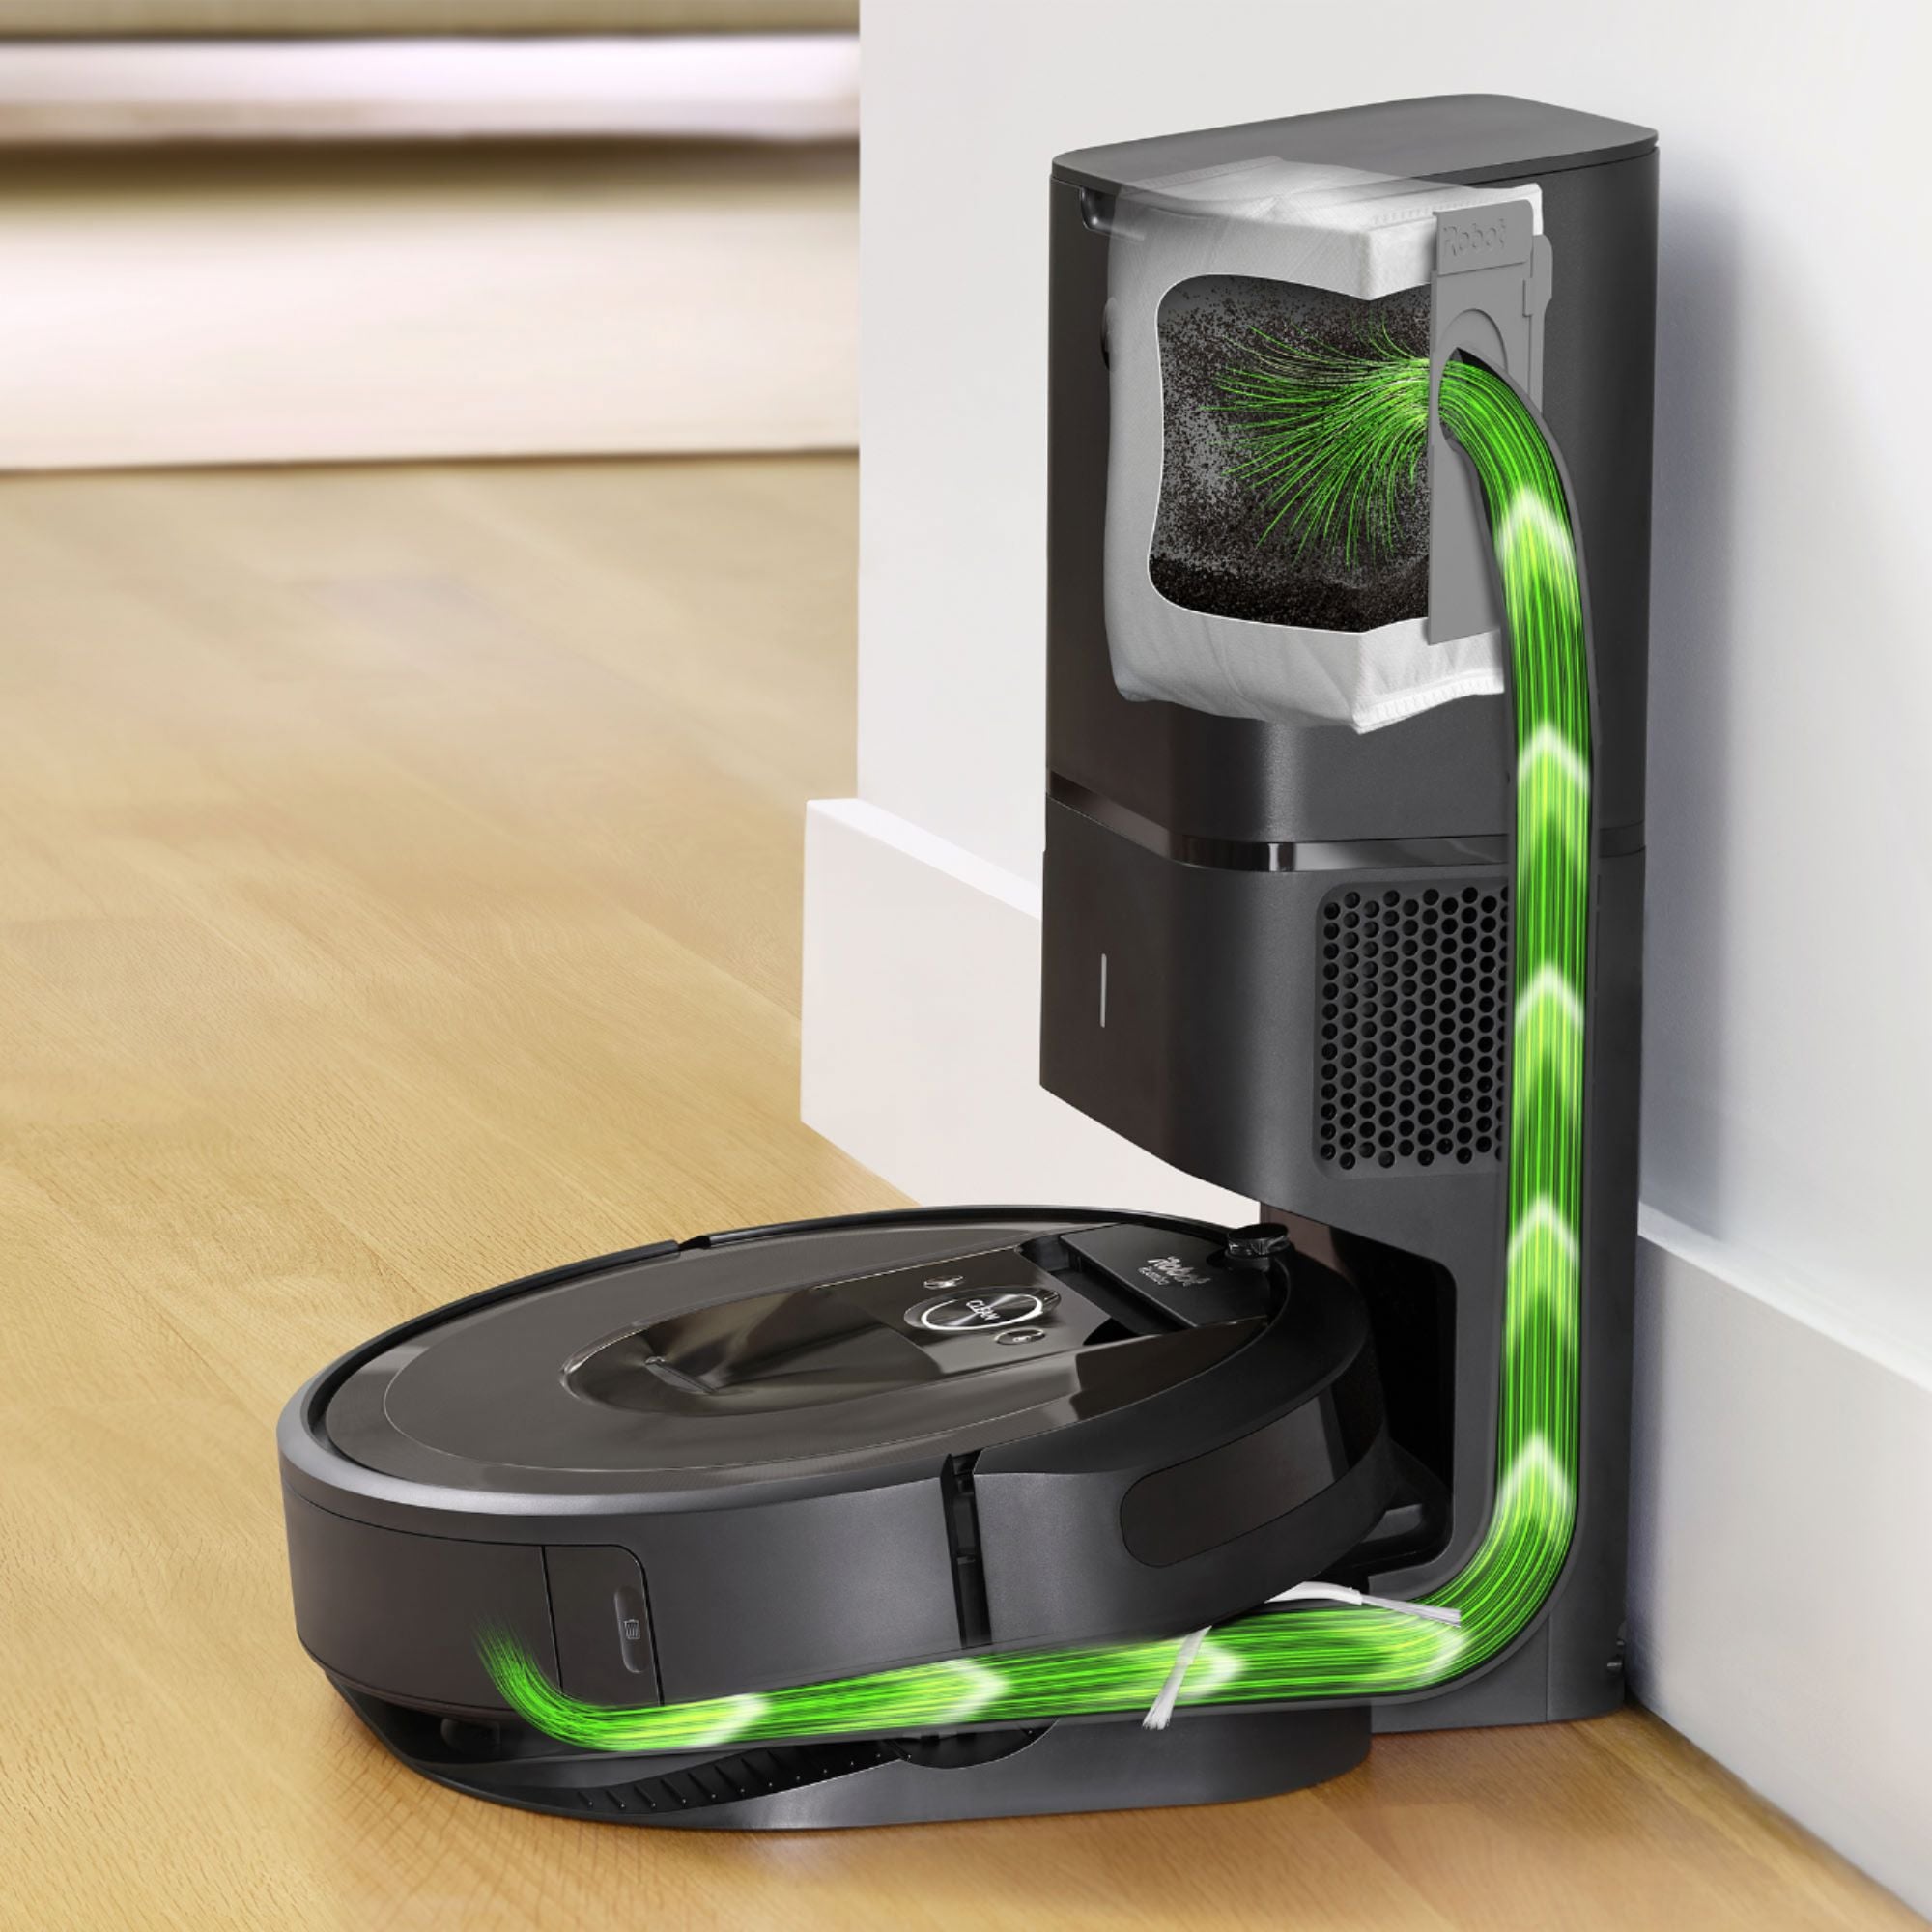 iRobot Roomba i7+ (7550) Wi-Fi Connected Self-Emptying Robot Vacuum - Charcoal $499.99